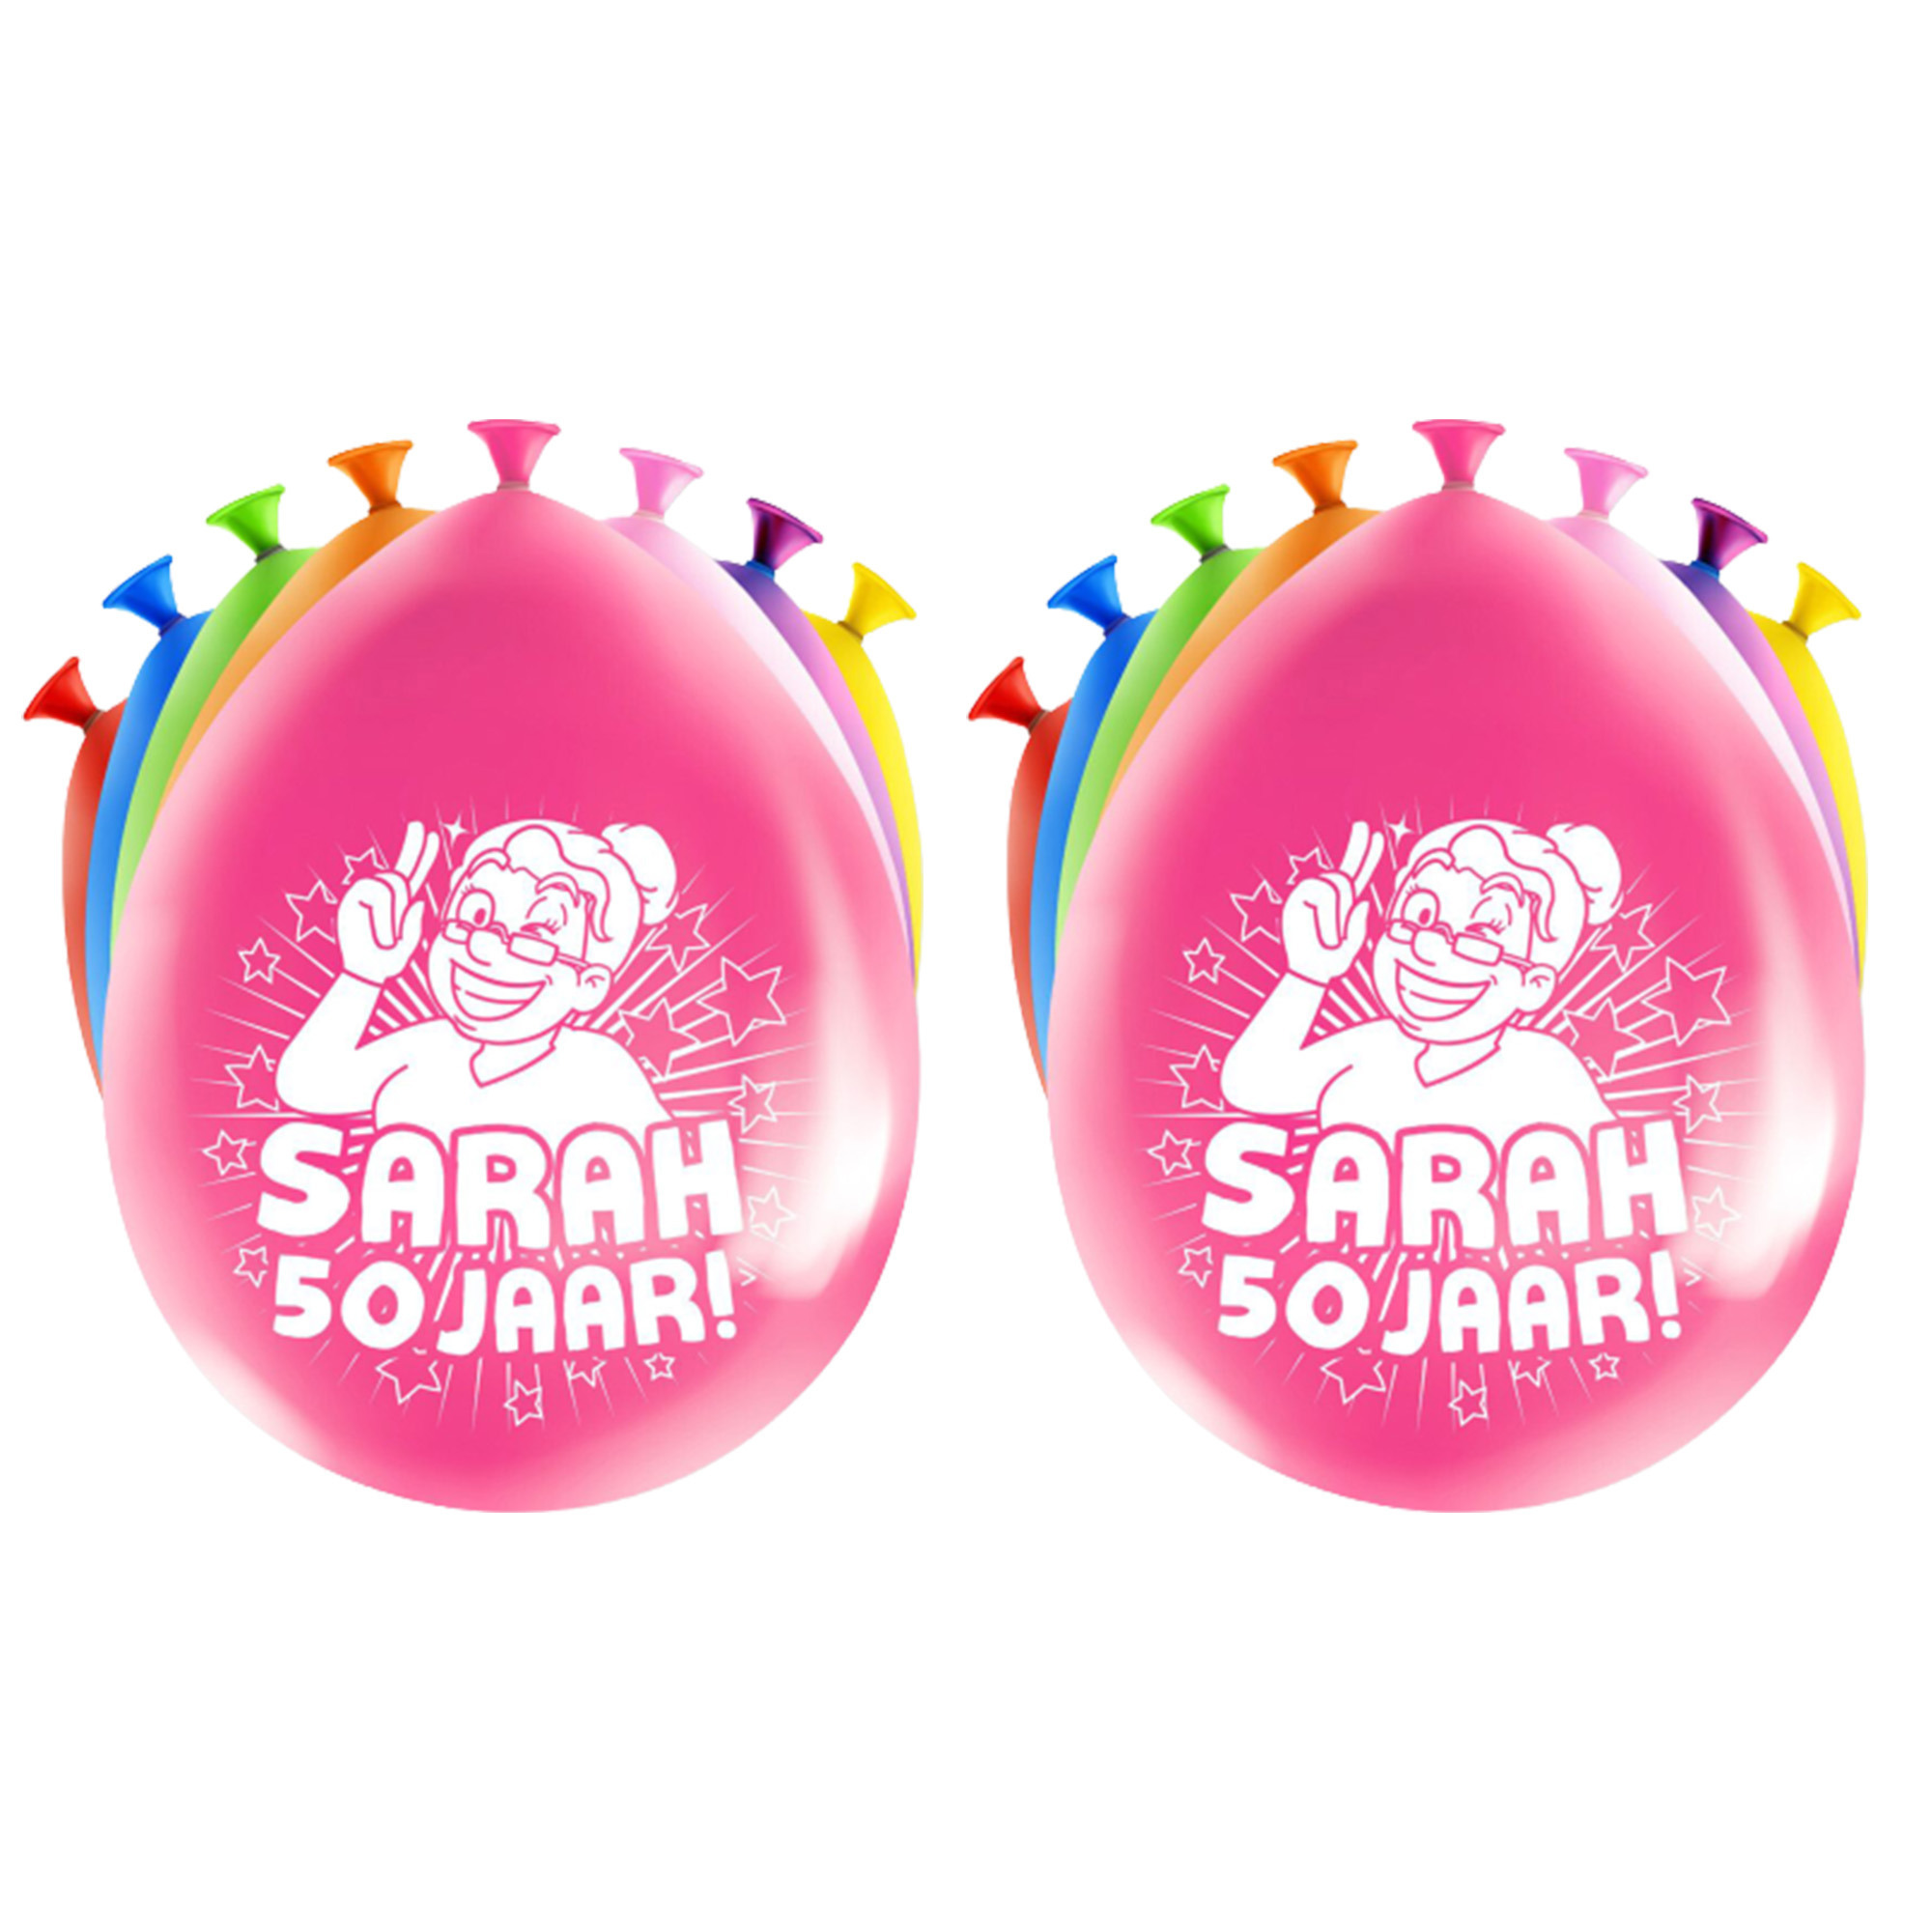 24x stuks Sarah-50 jaar feest ballonnen diverse kleuren latex ca 30 cm